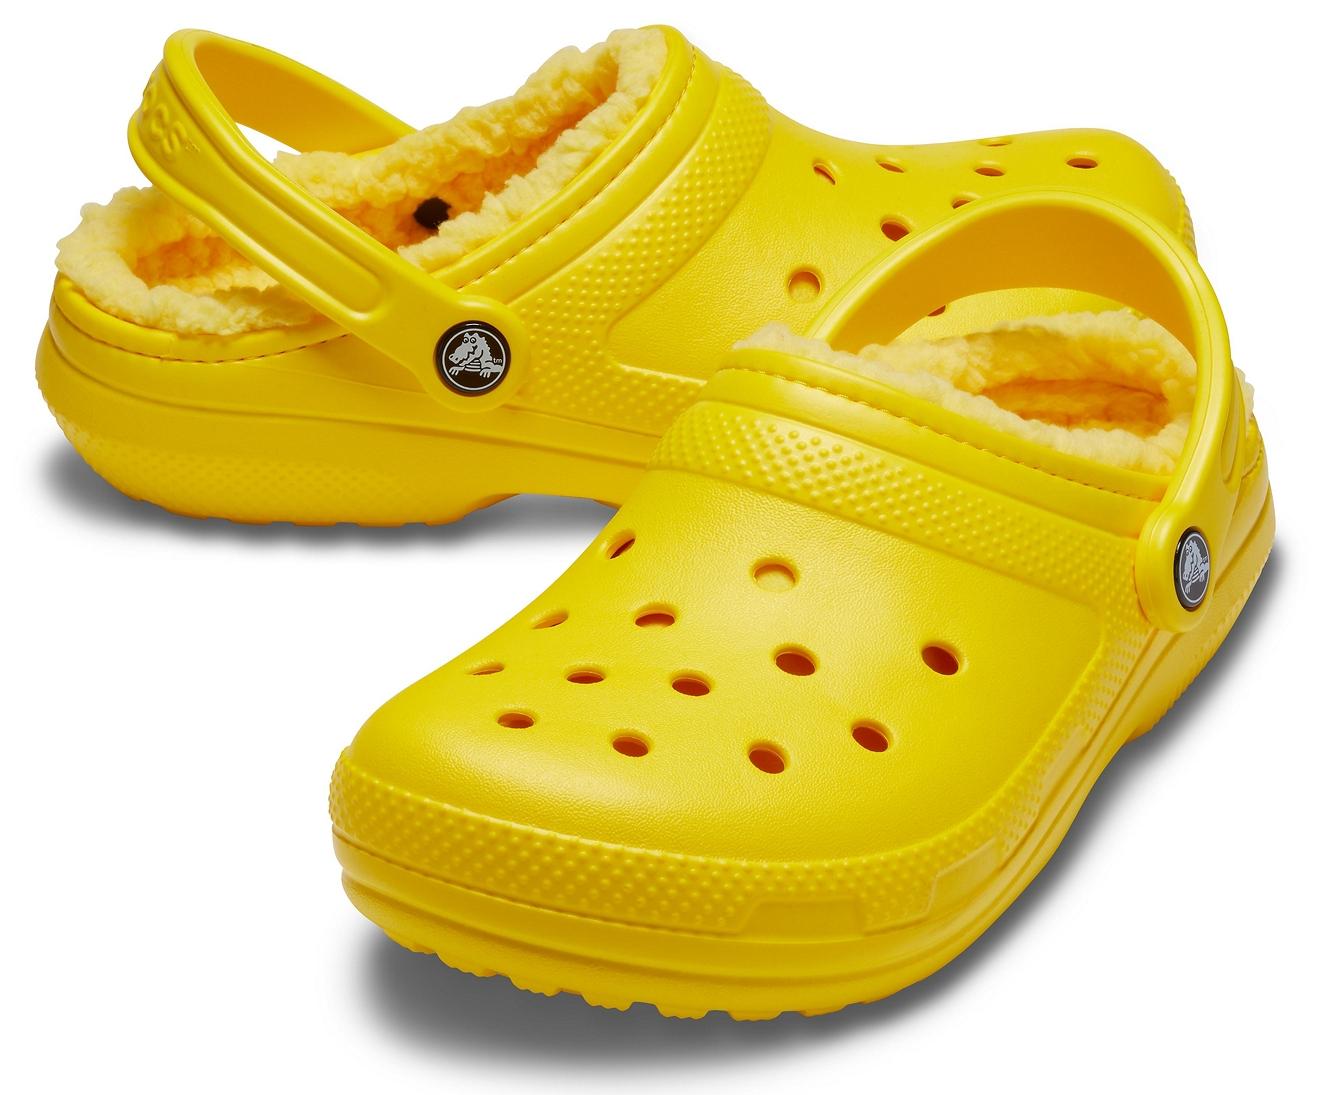 where to buy crocs shoes near me